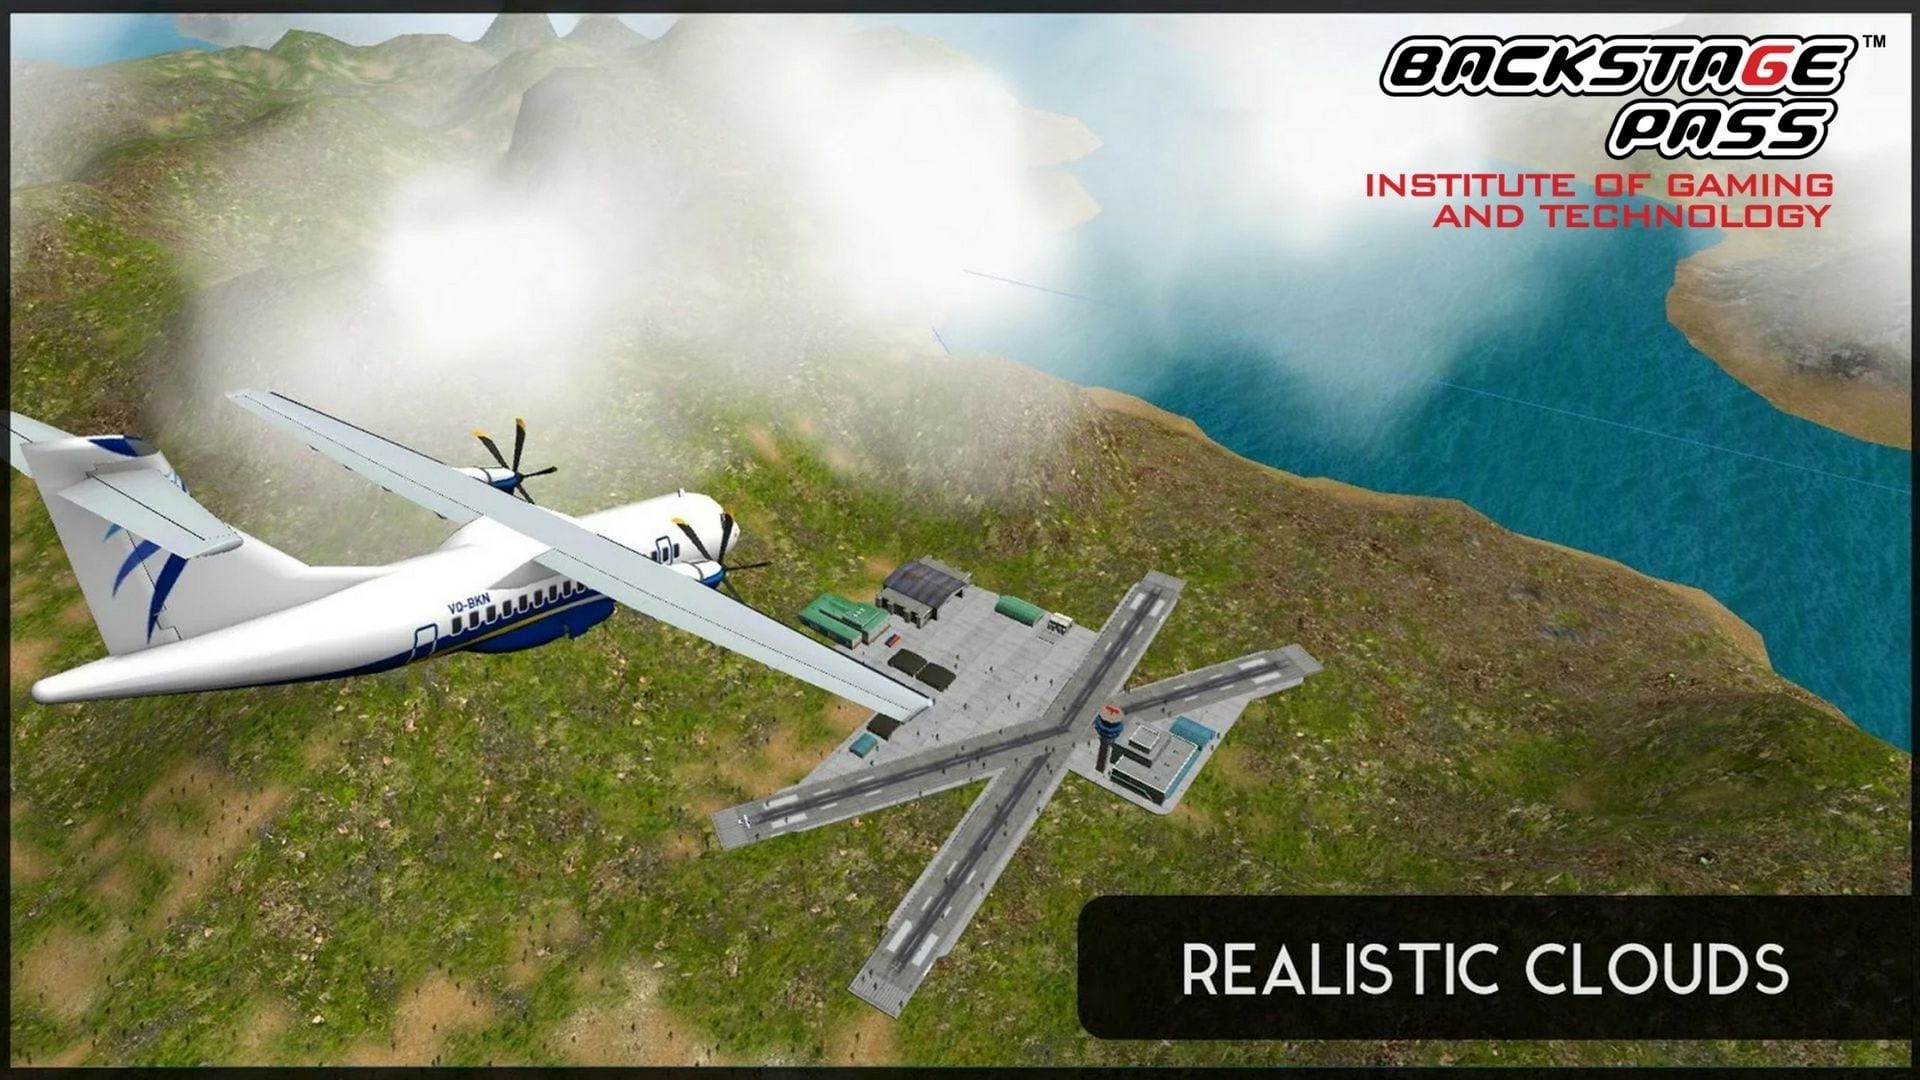 Backstage Pass alumni Avion Flight Simulator game crosses 5m downloads